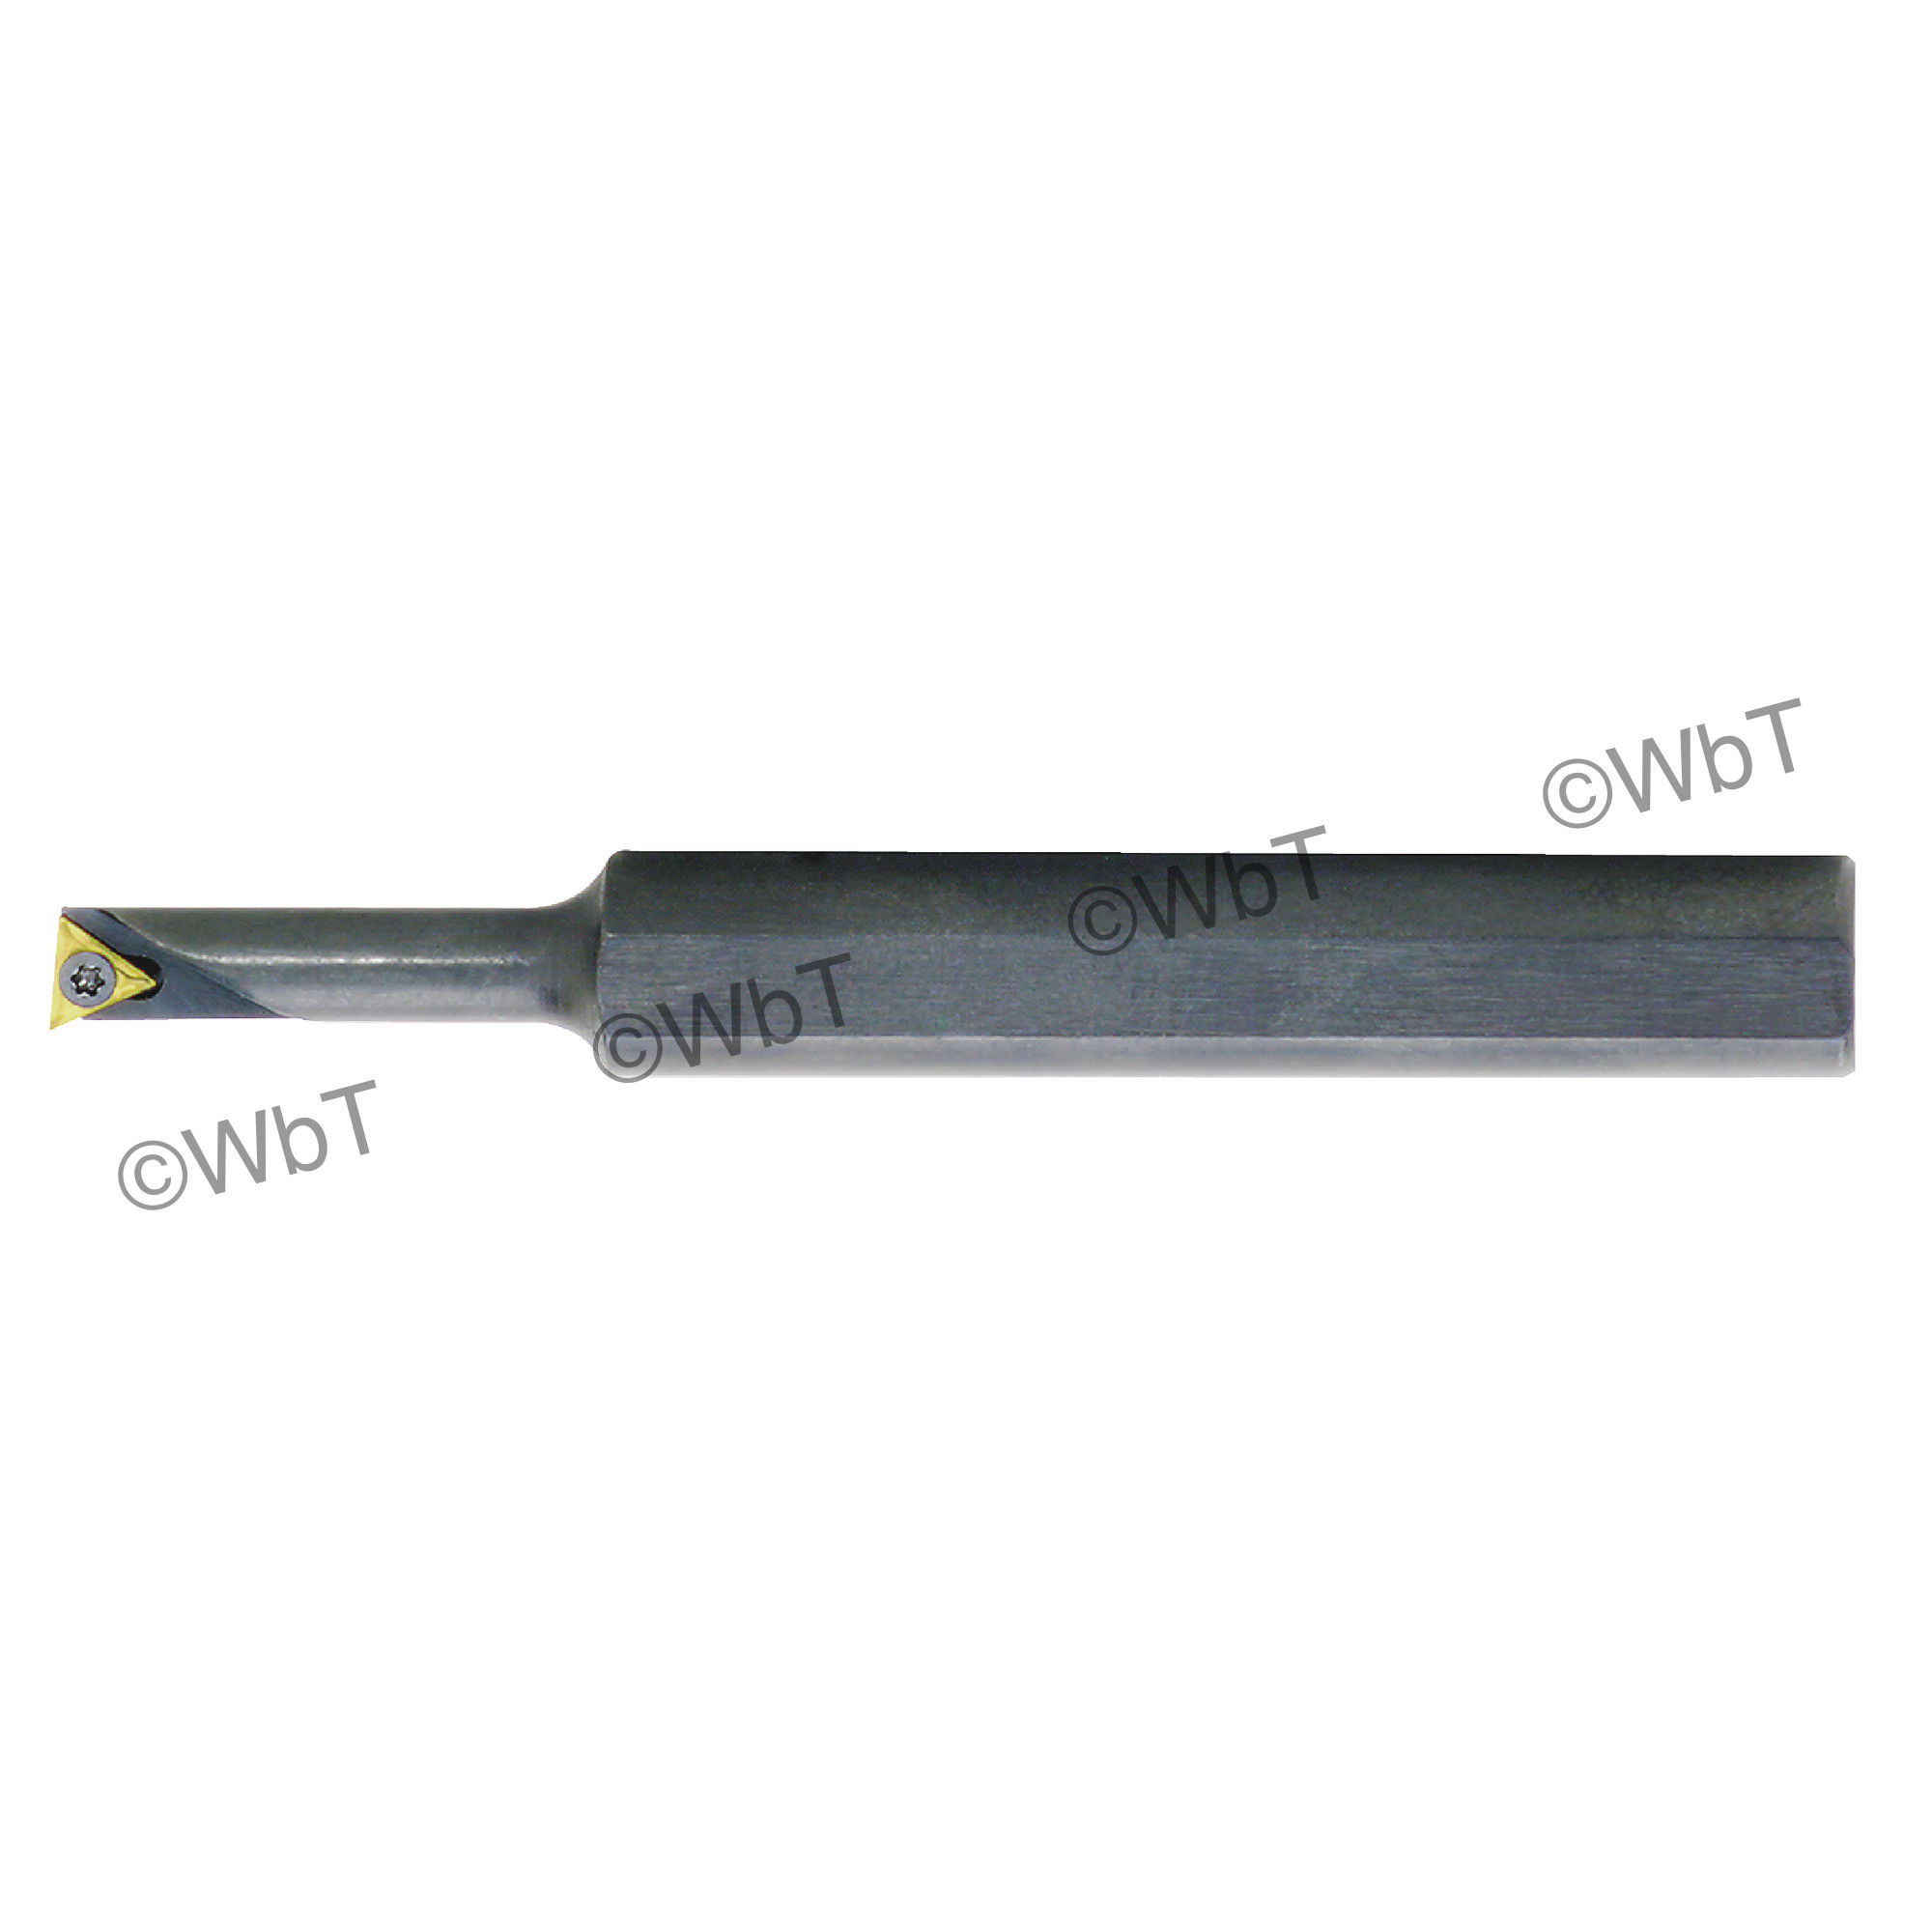 TTC PRODUCTION - NBS6-5-3 / Steel Boring Bar / 0.500@QUOT: Shank / TCMT1.210.5 / Right Hand